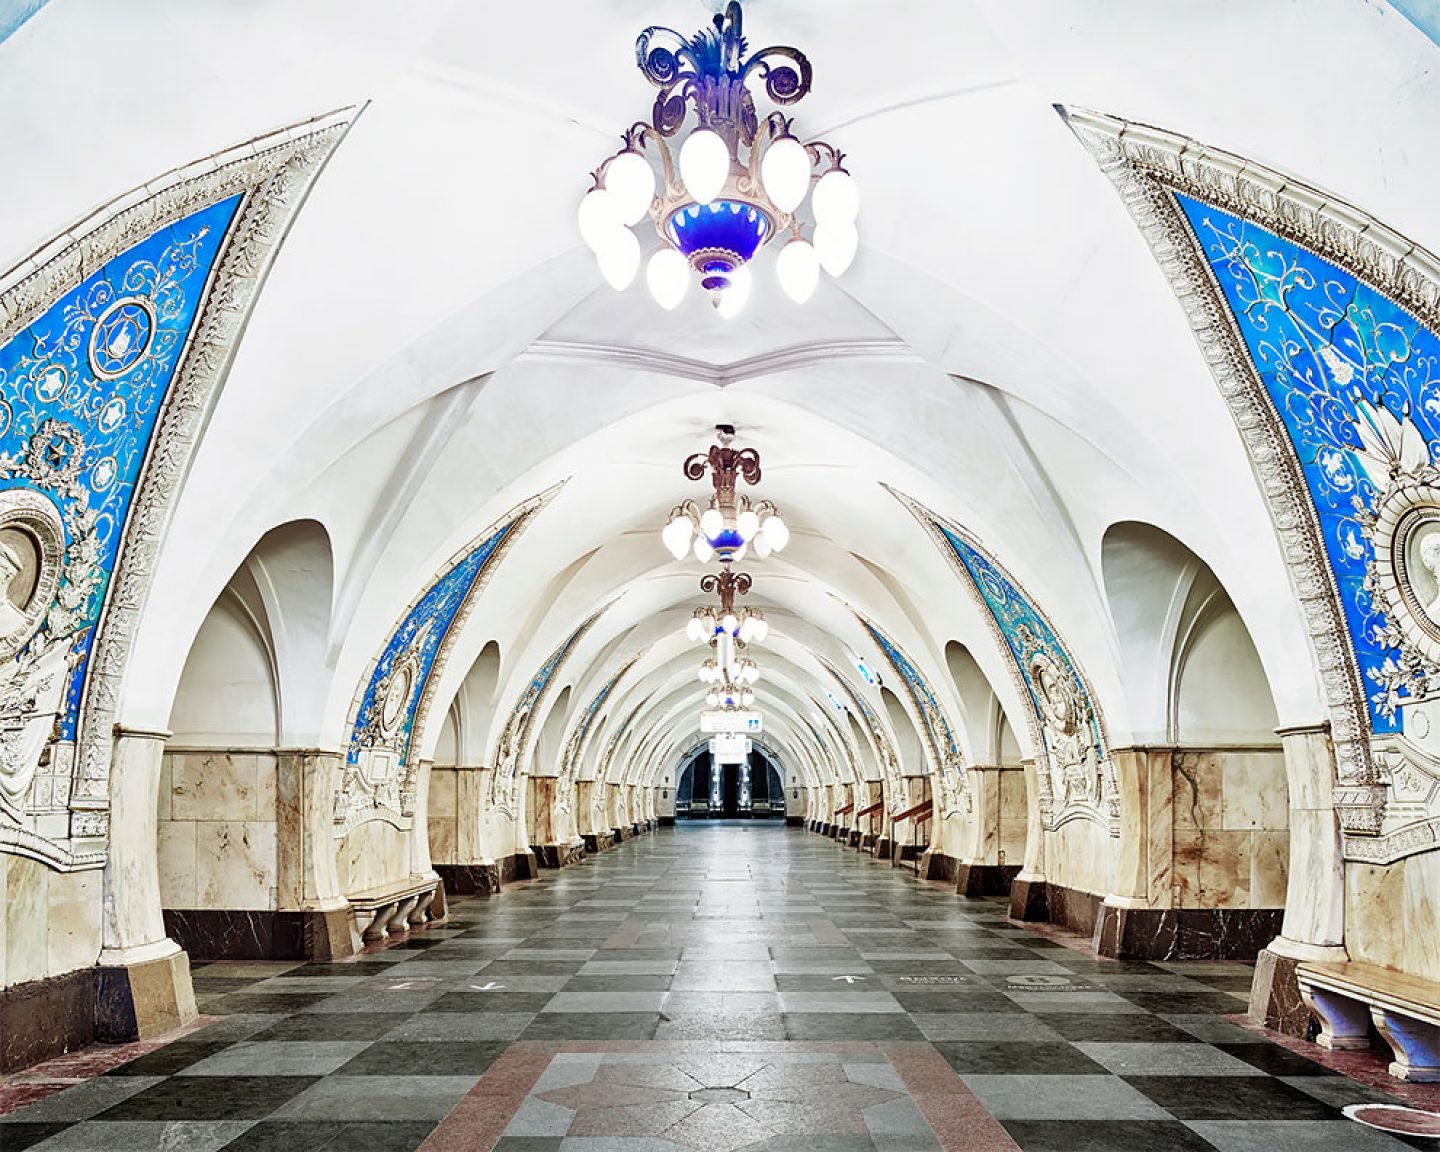 Photography_Moscow_Stunning_Underground_Network_David_Burdeny 02